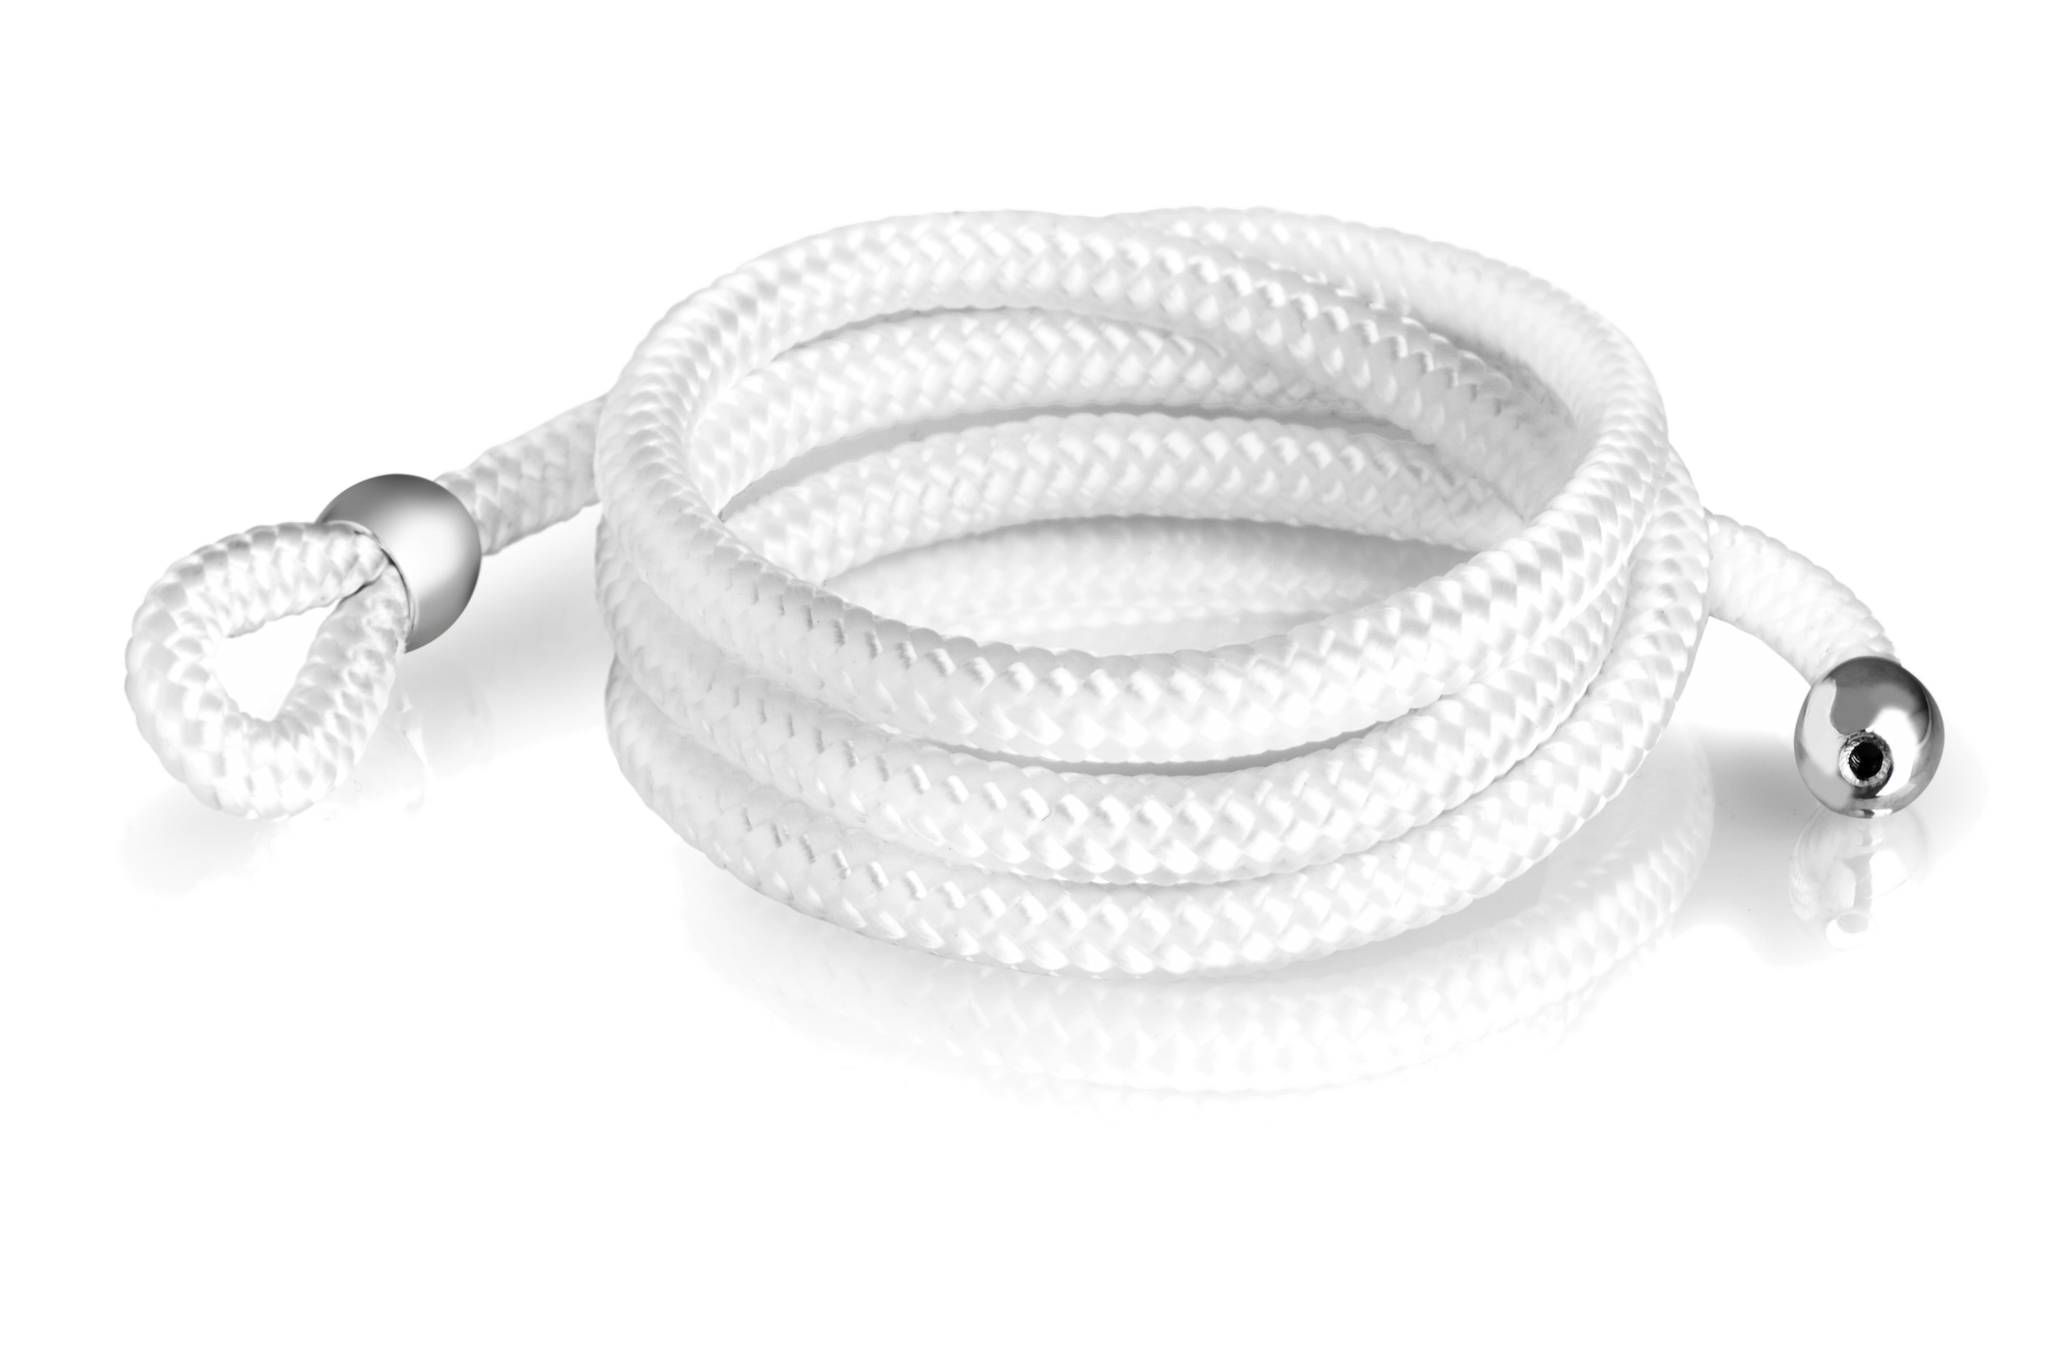 Wechselband Segeltau Interchangeable Sailing rope Bracelet Armband Ocean Story